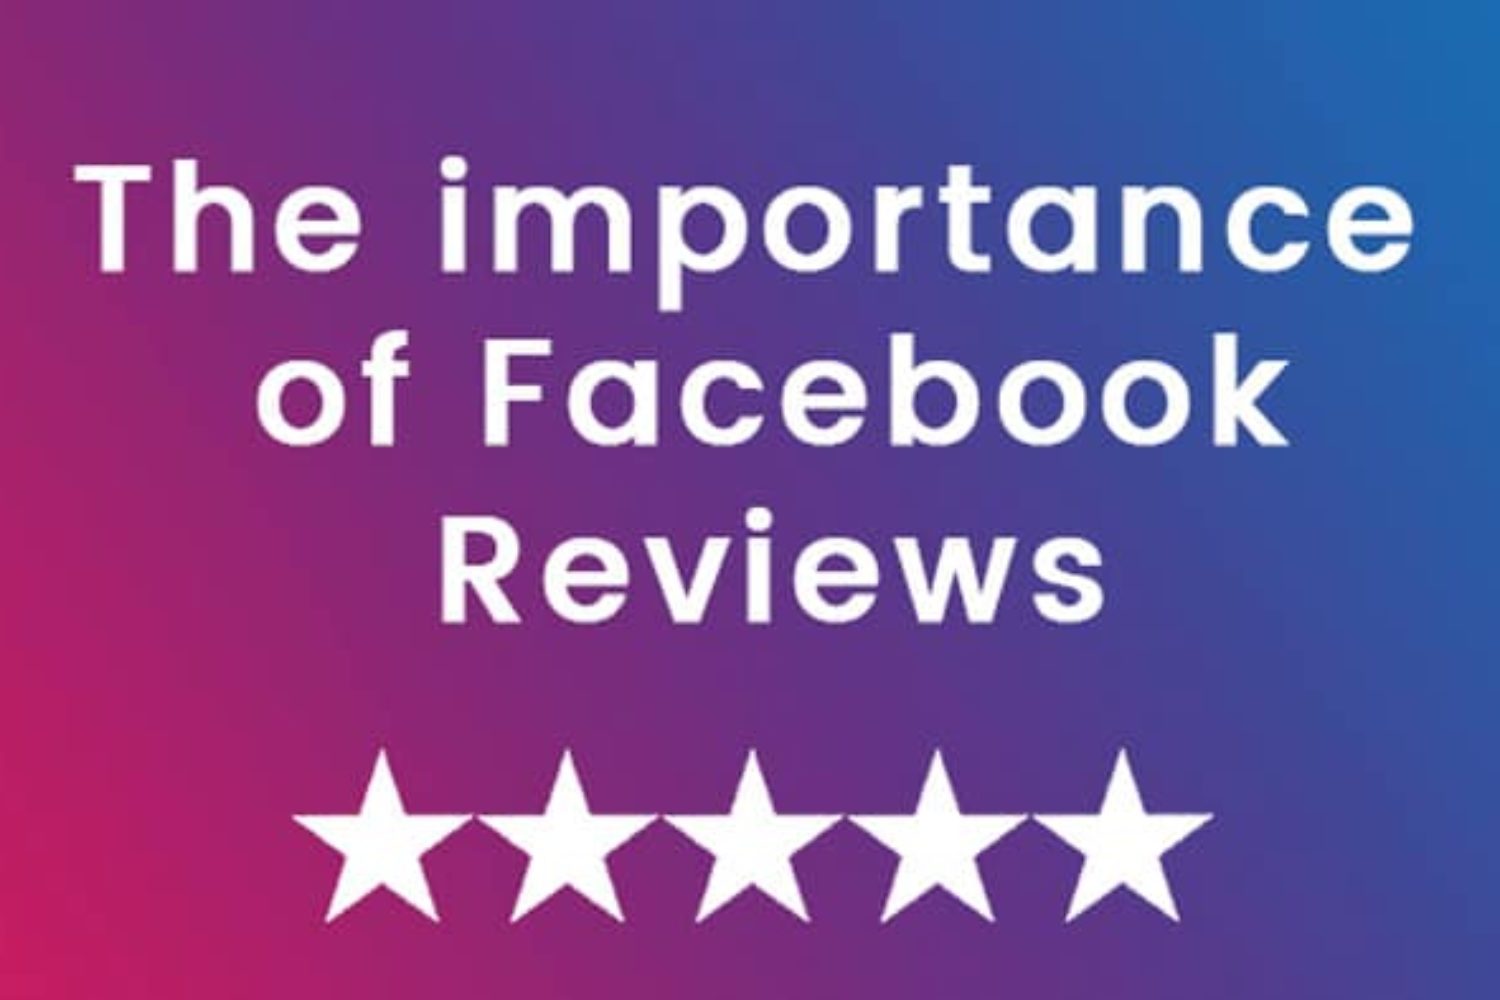 facebook reviews definition